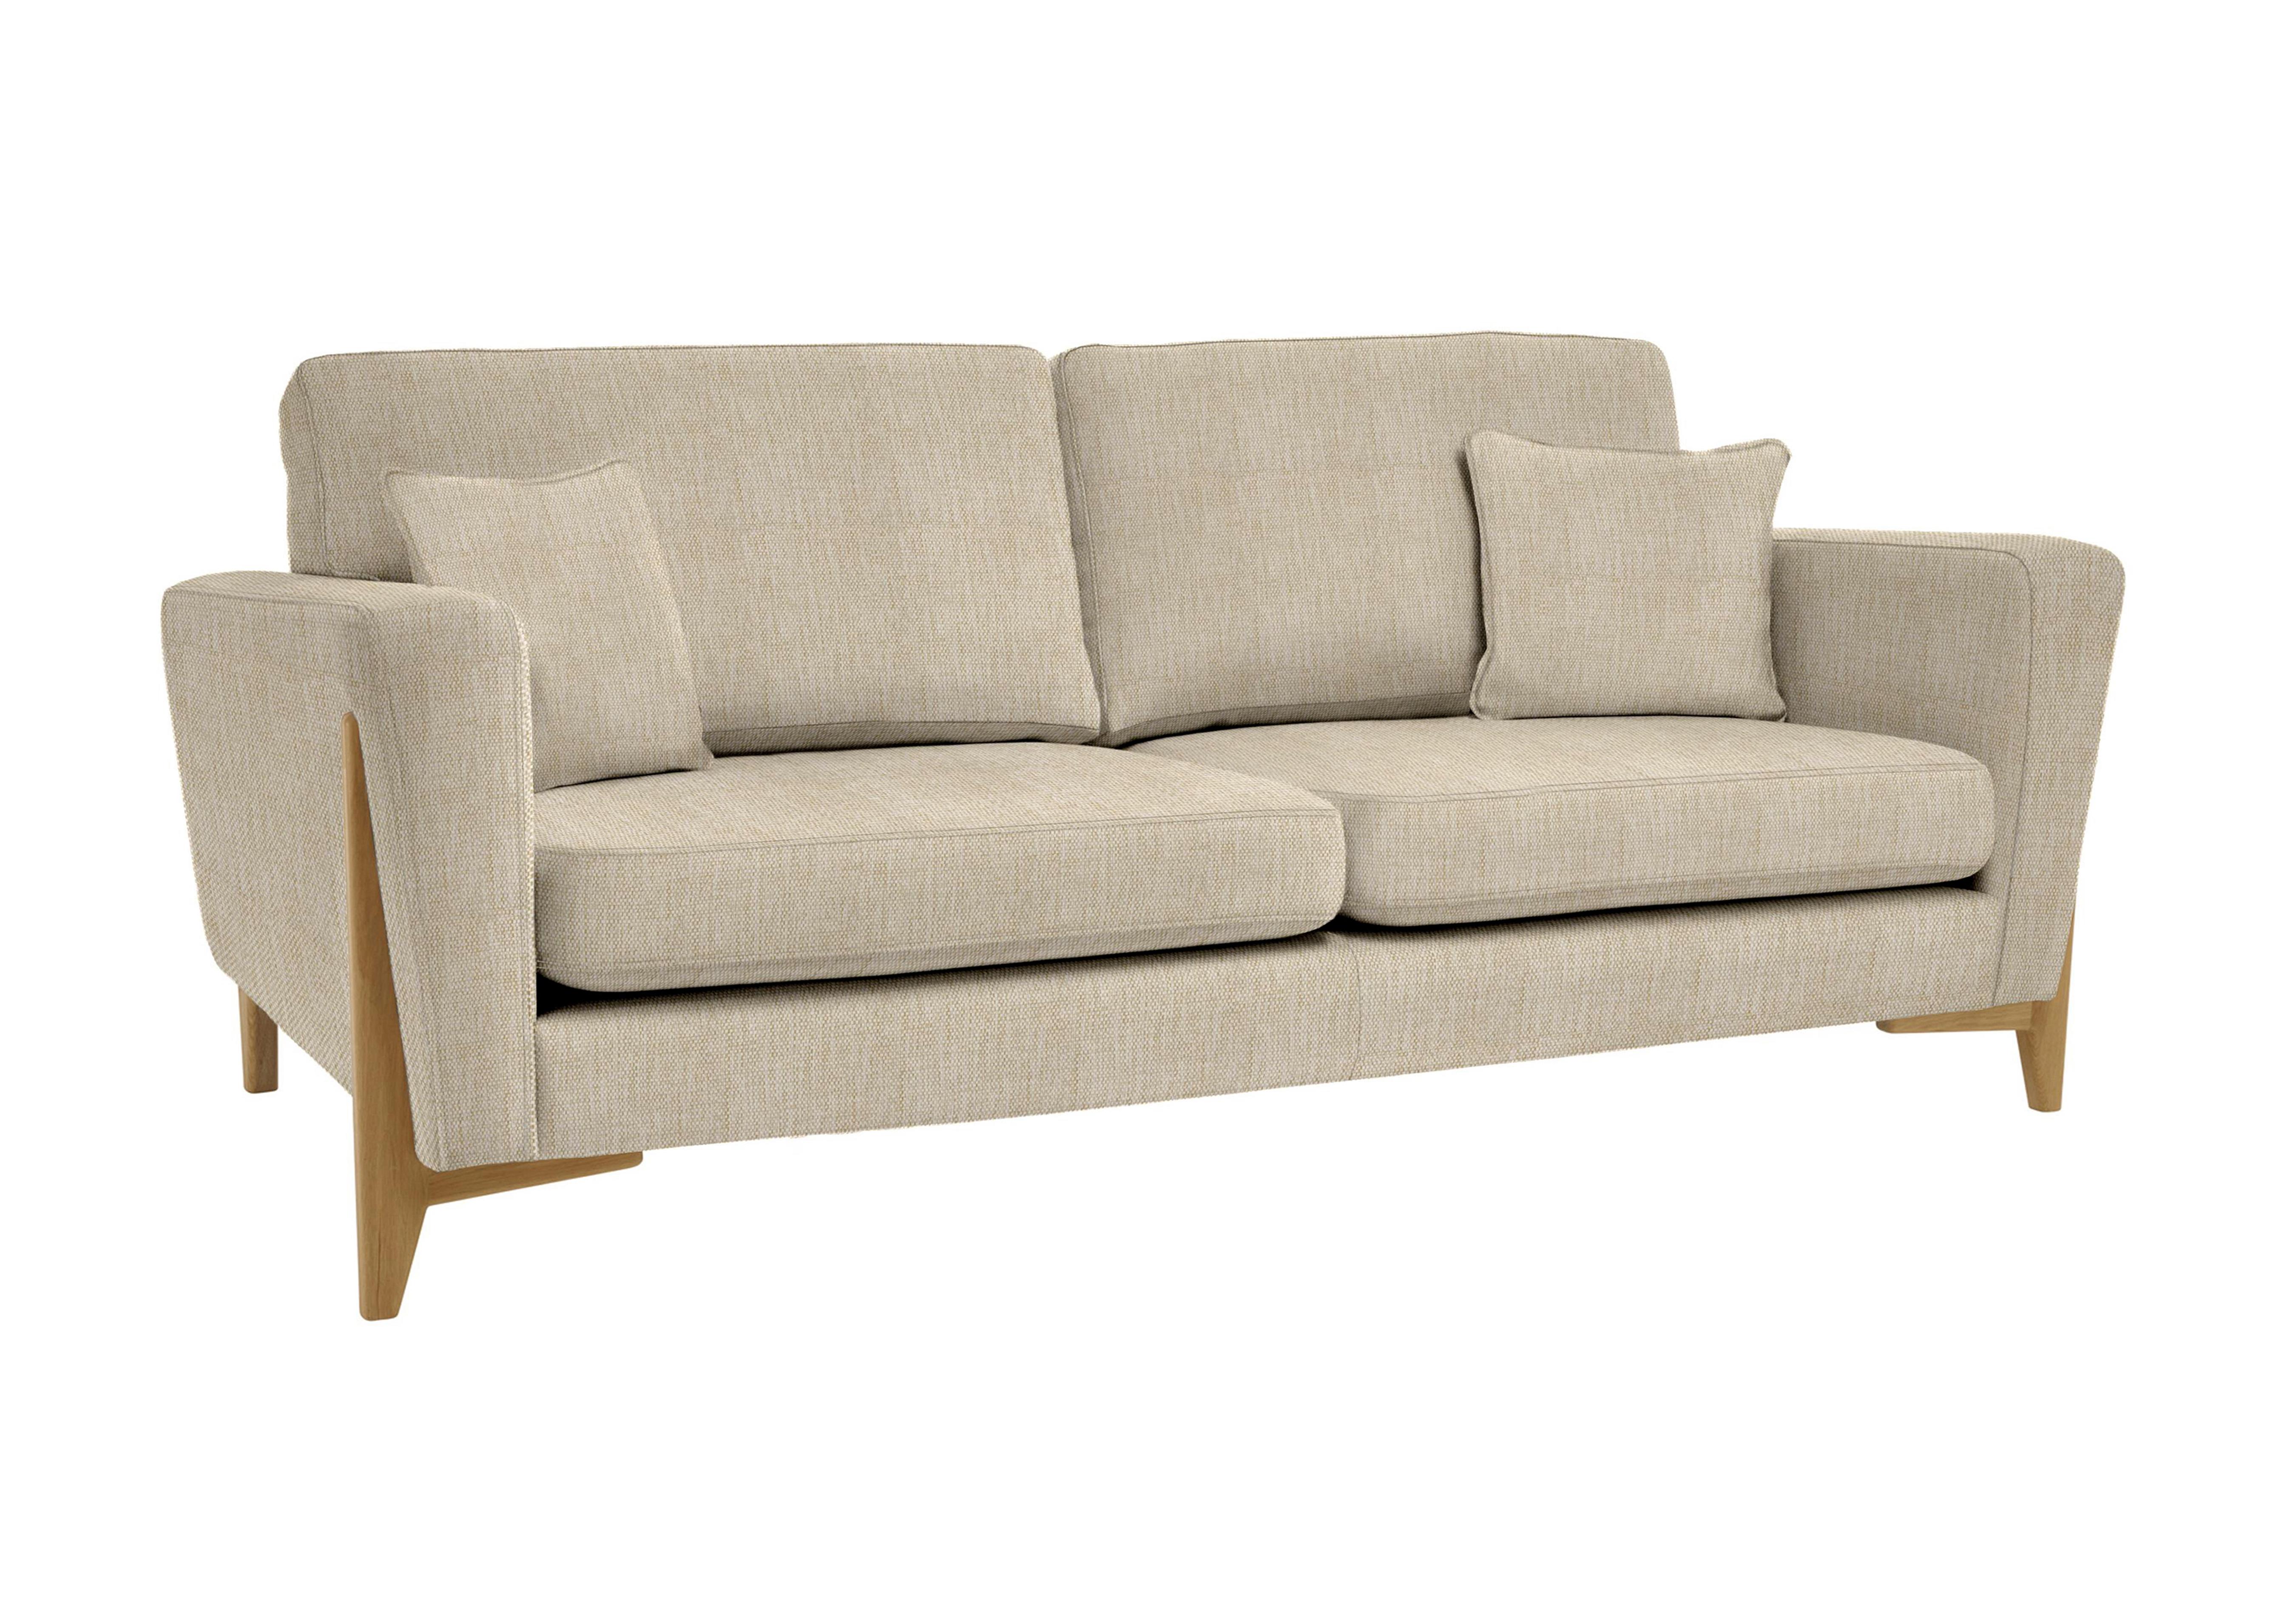 Marinello Large Fabric Sofa in T214 on Furniture Village